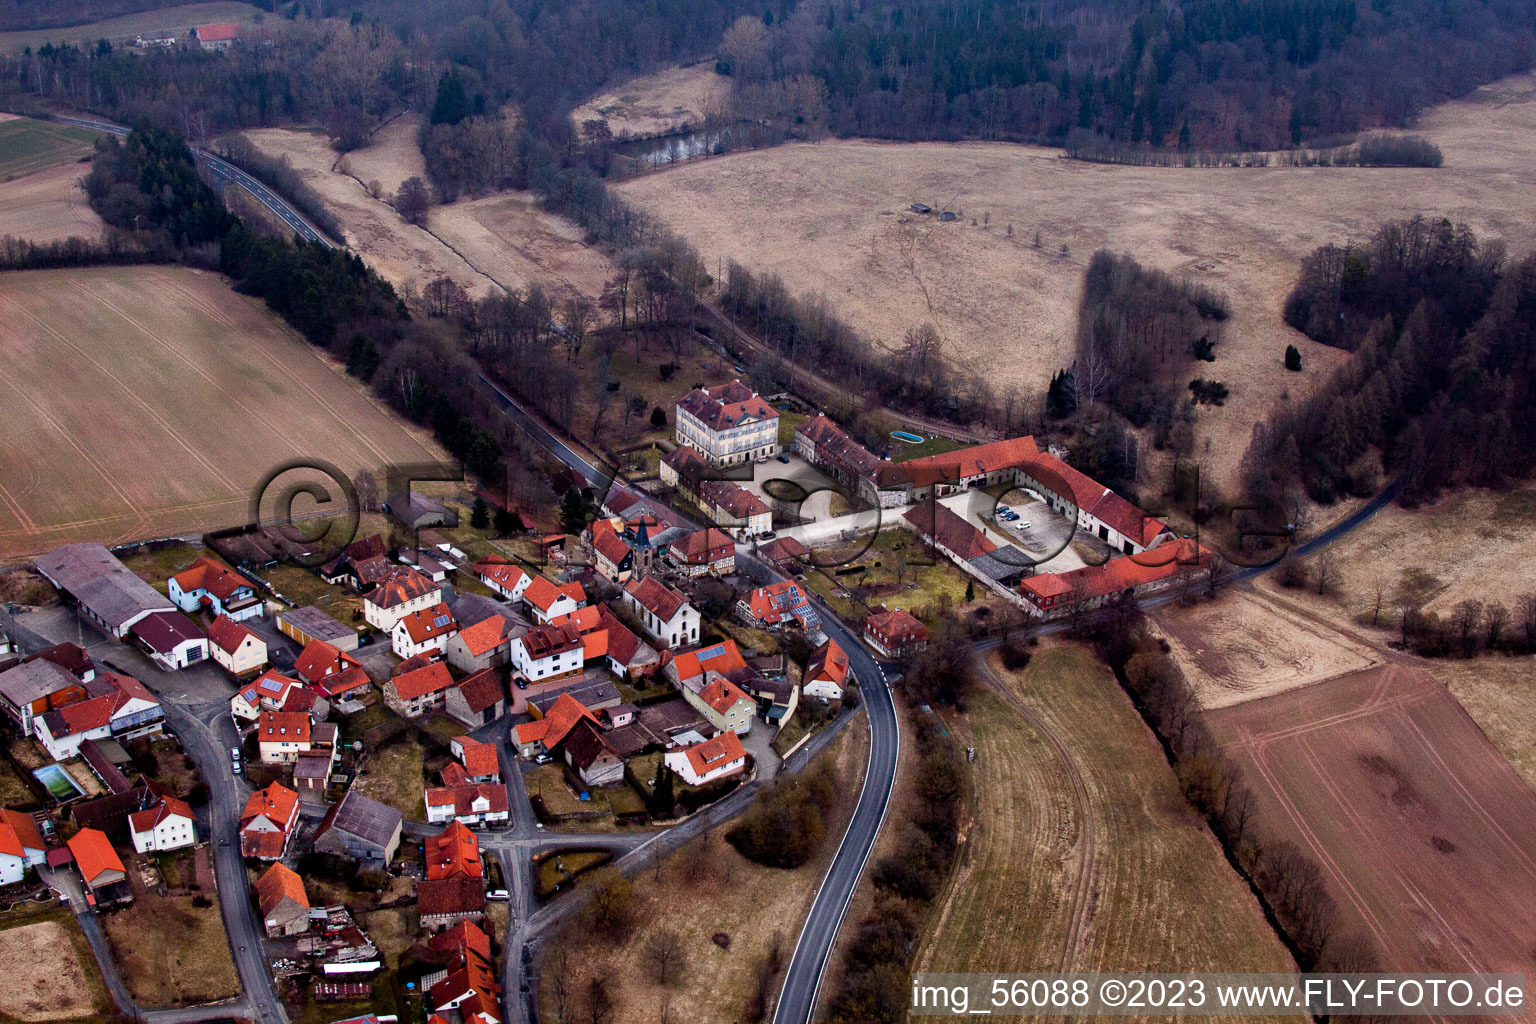 Hofheim in Unterfranken dans le département Bavière, Allemagne vue d'en haut